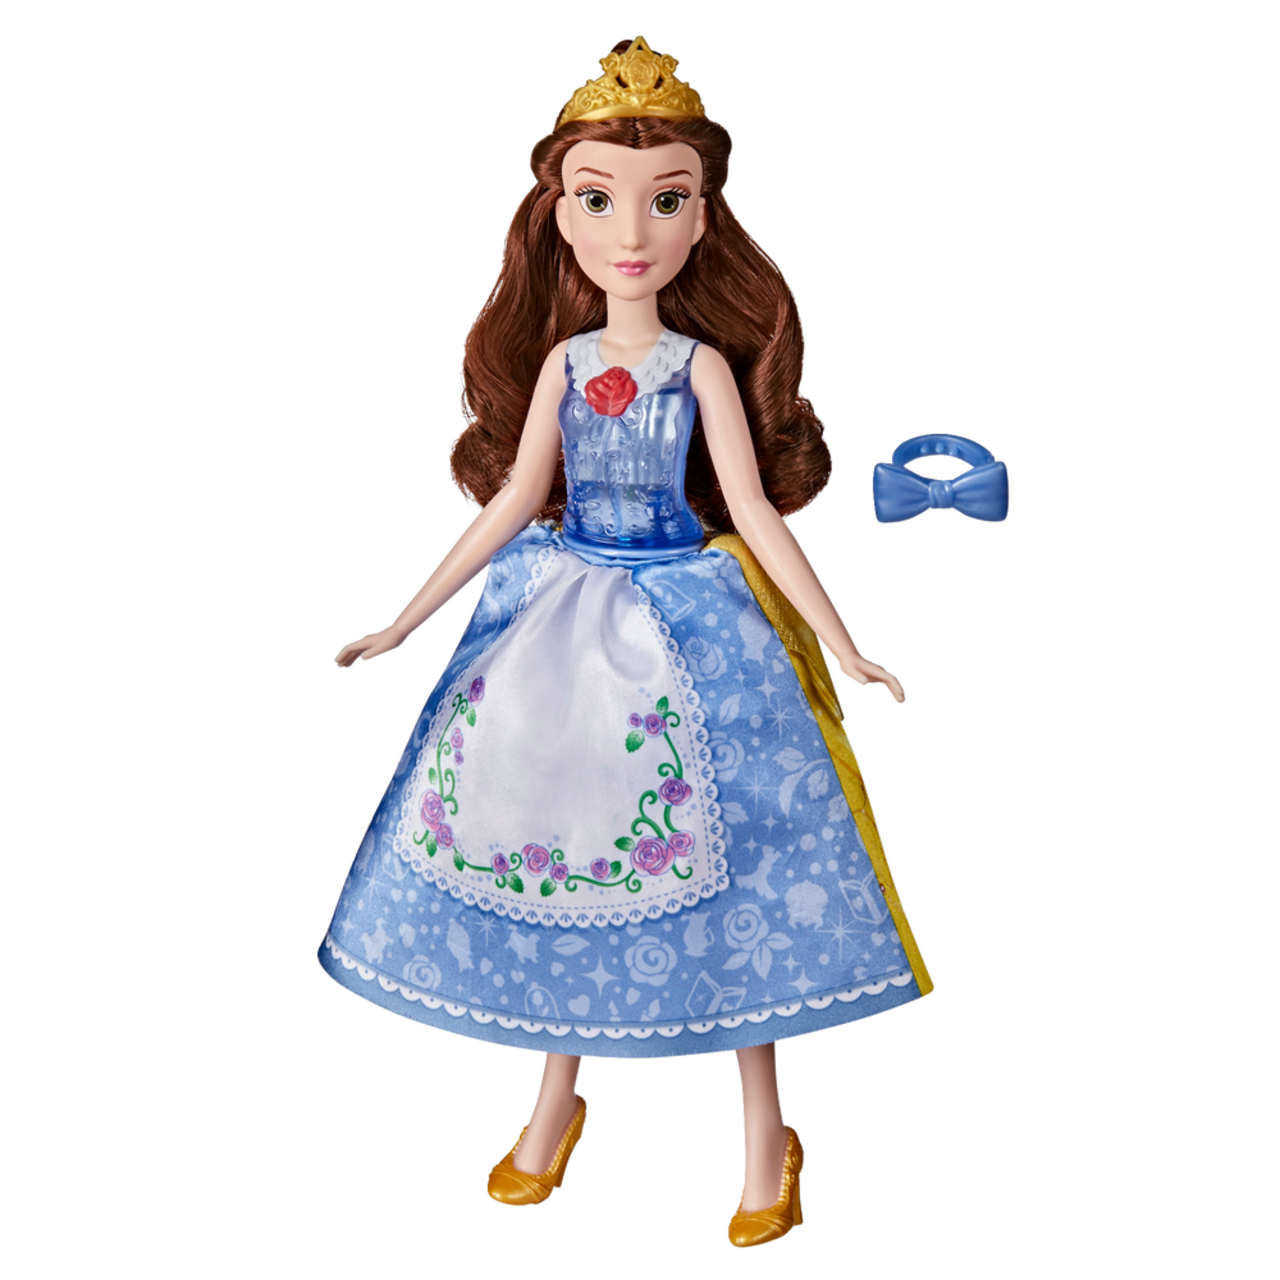 6 paper dress cutout templates for 8 Disney princess characters    Princess crafts, Disney princess dresses, Disney princess birthday party